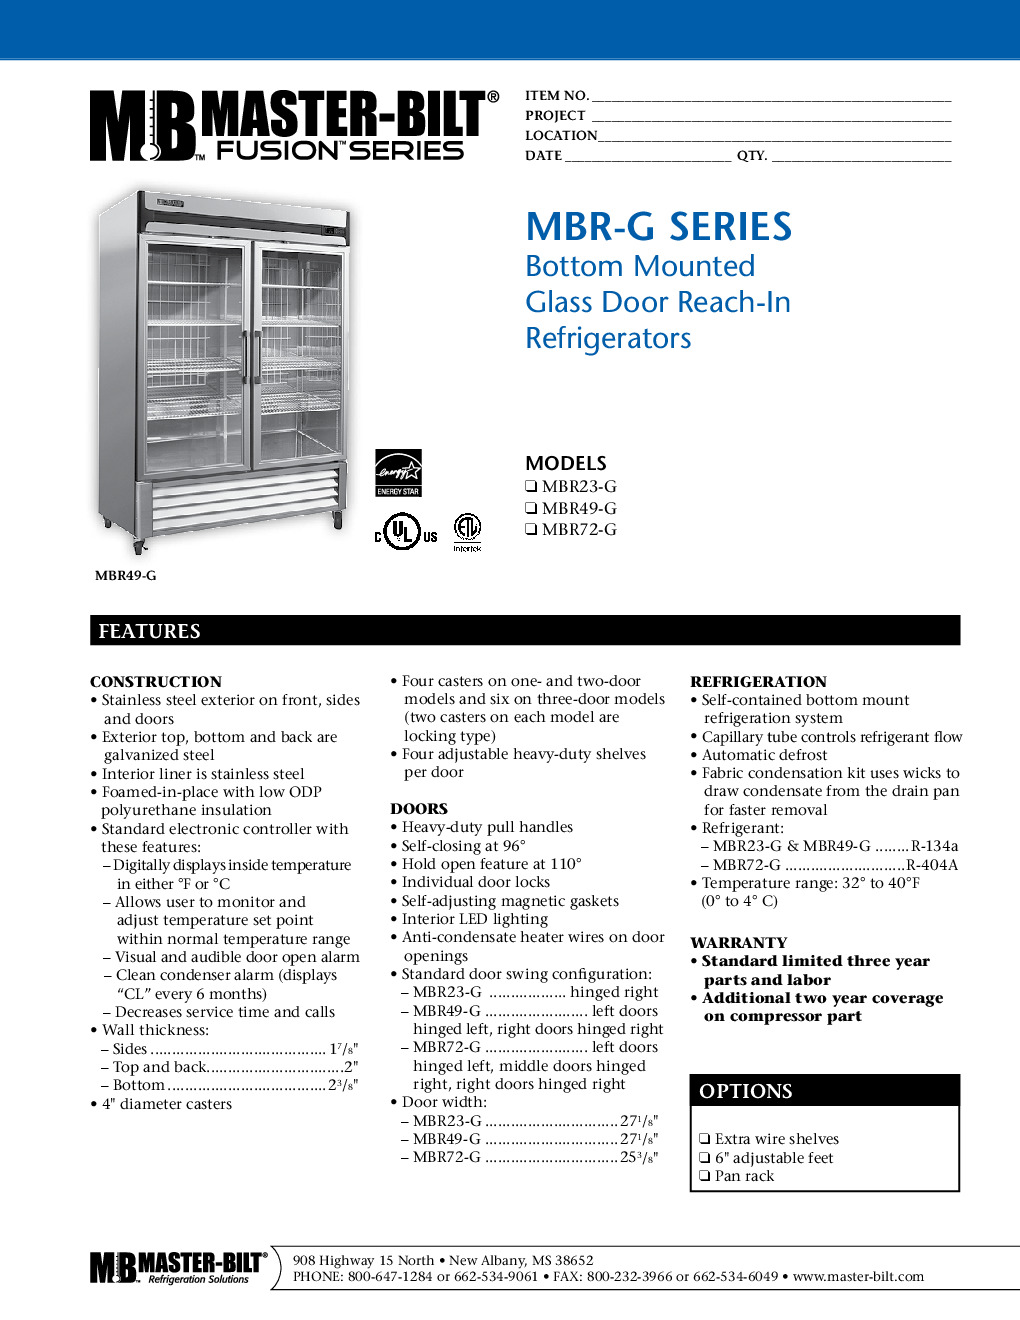 Master-Bilt MBR23-G Reach-In Refrigerator